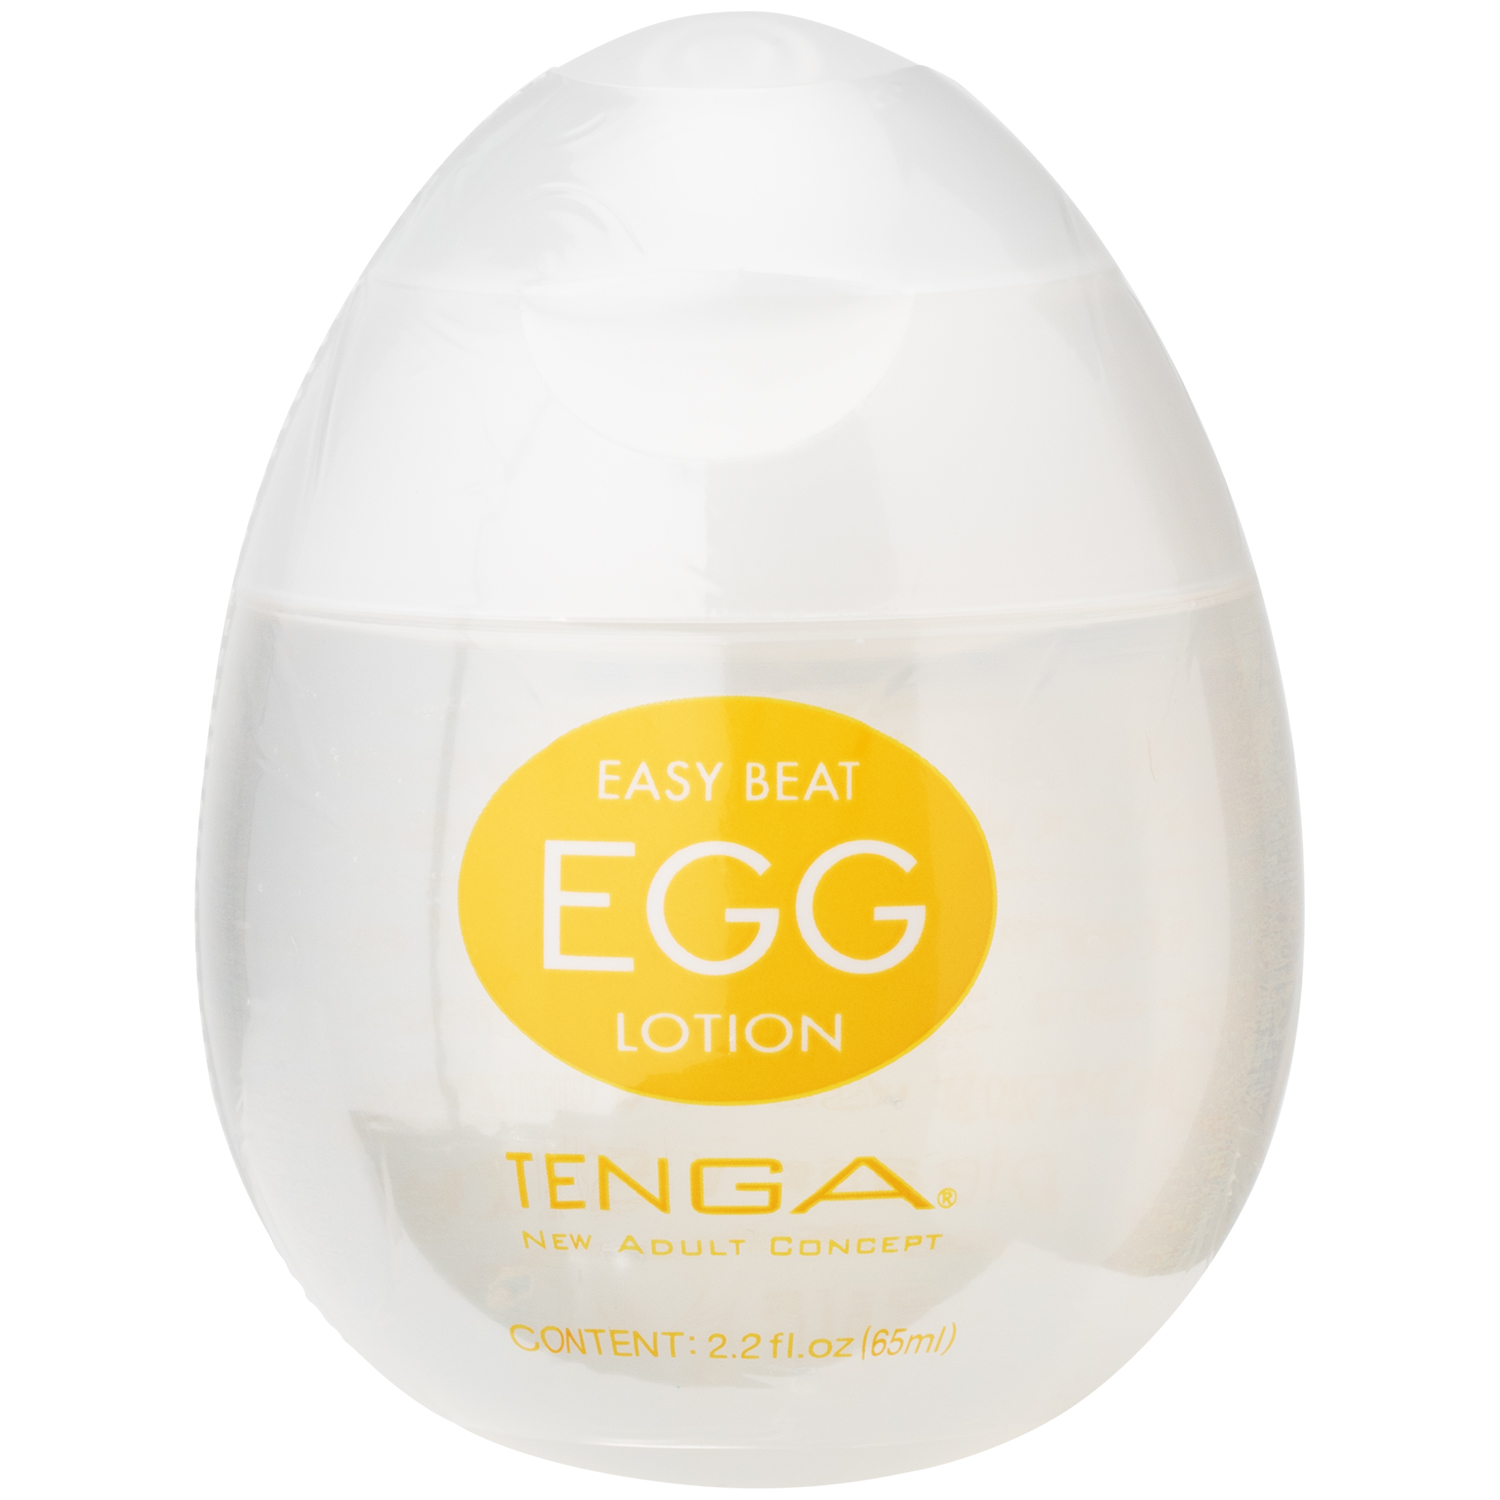 Tenga Egg Lotion Glidecreme 65 ml     - Klar